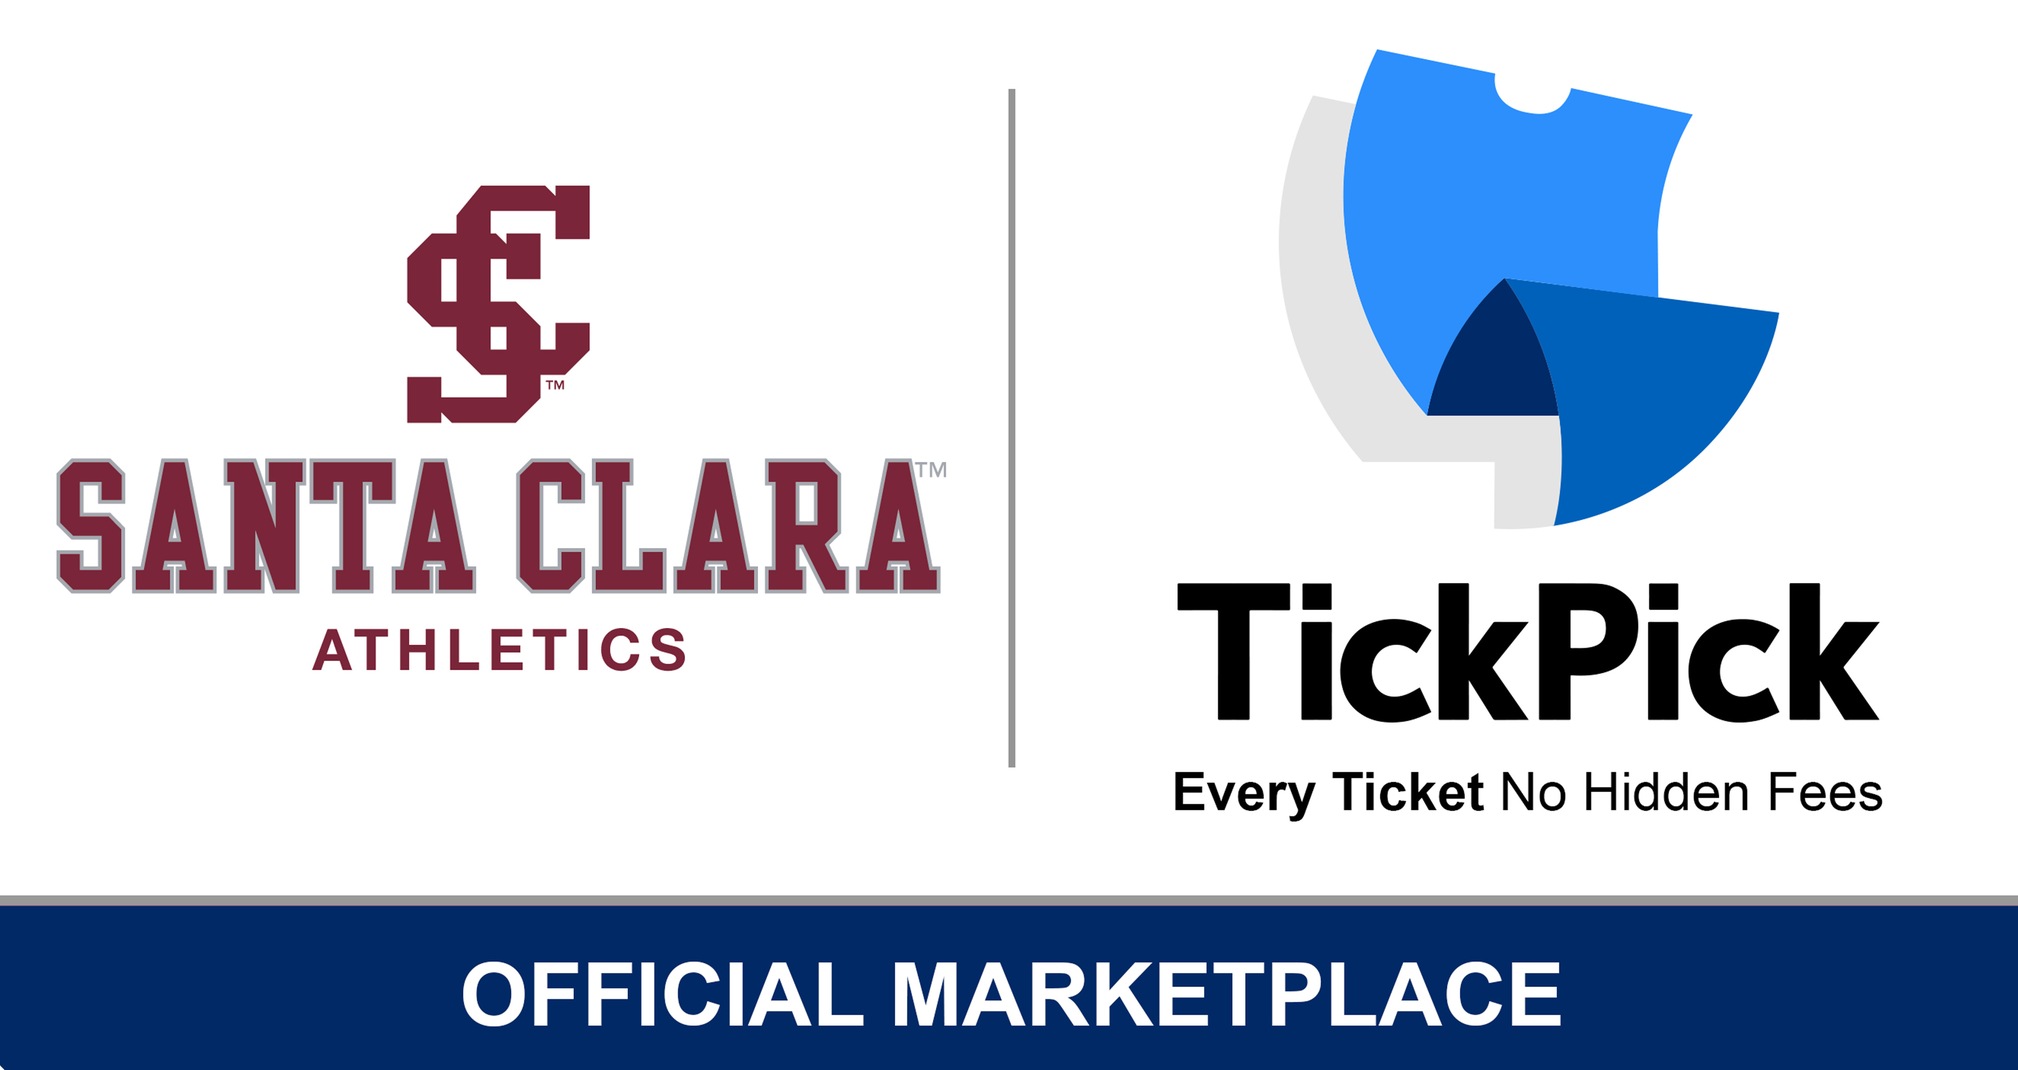 TickPick Named Official Ticket Marketplace for Santa Clara Athletics